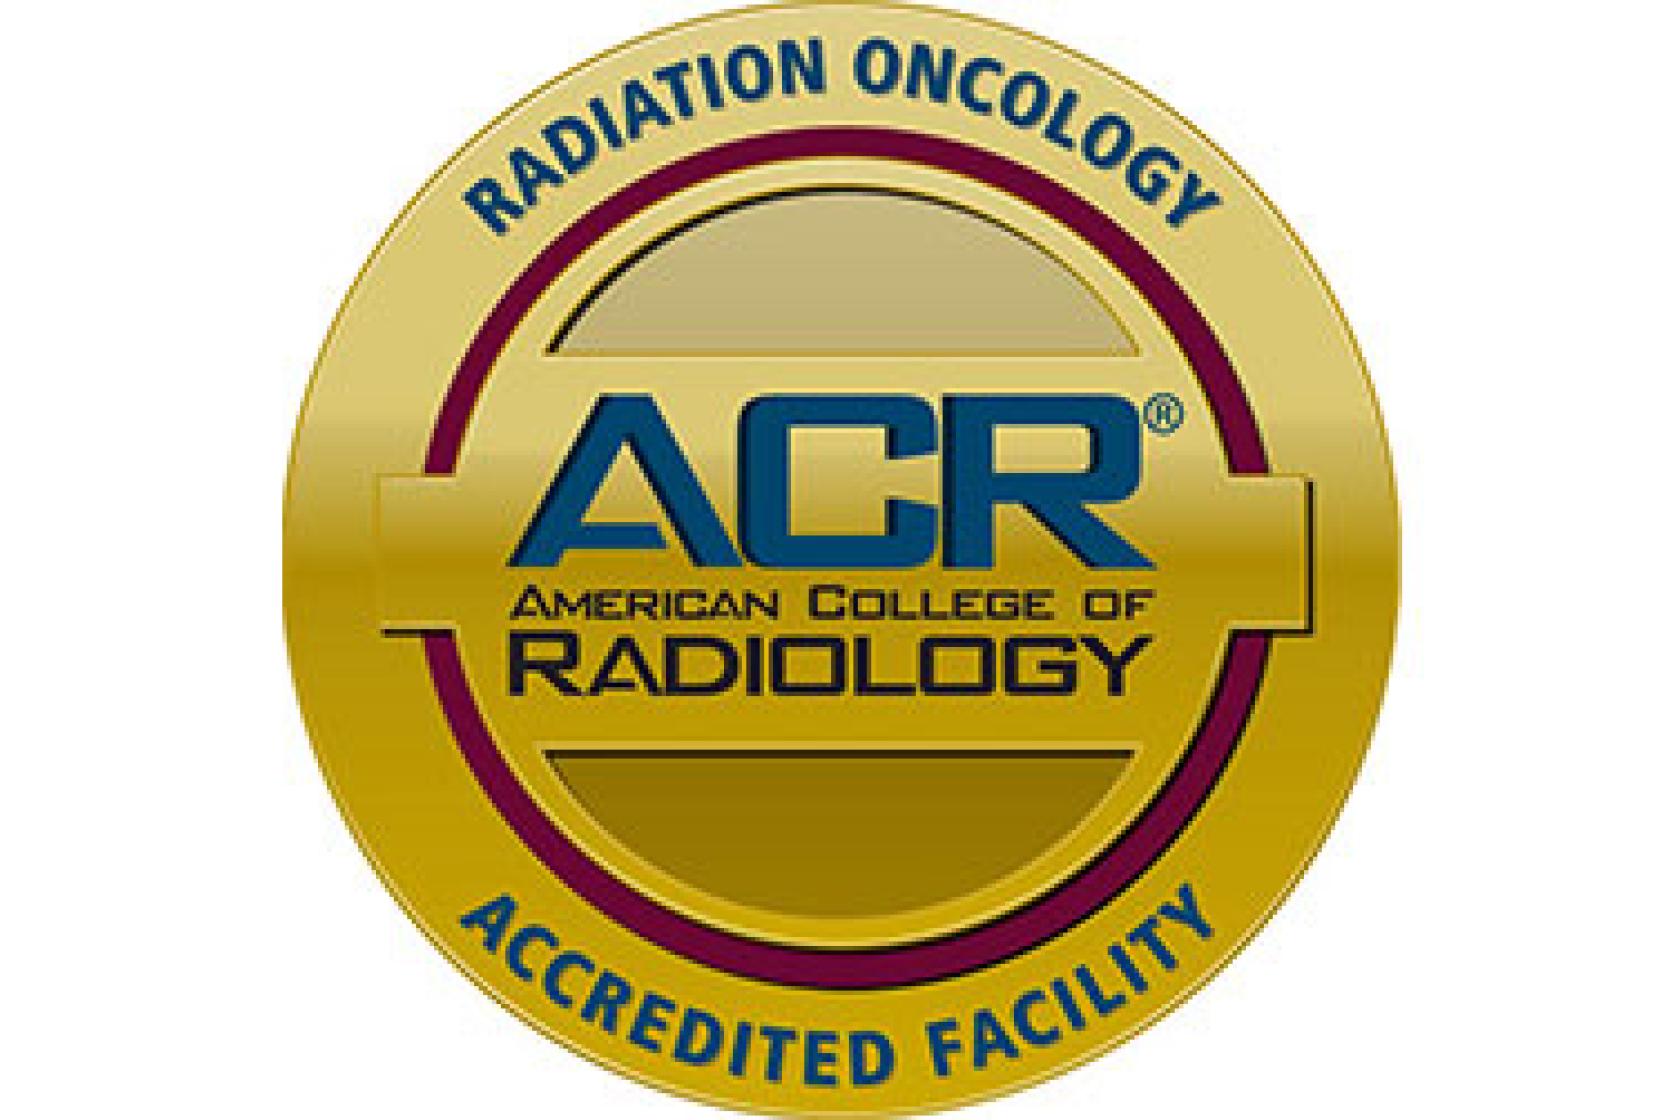 ACR Accredited Facility